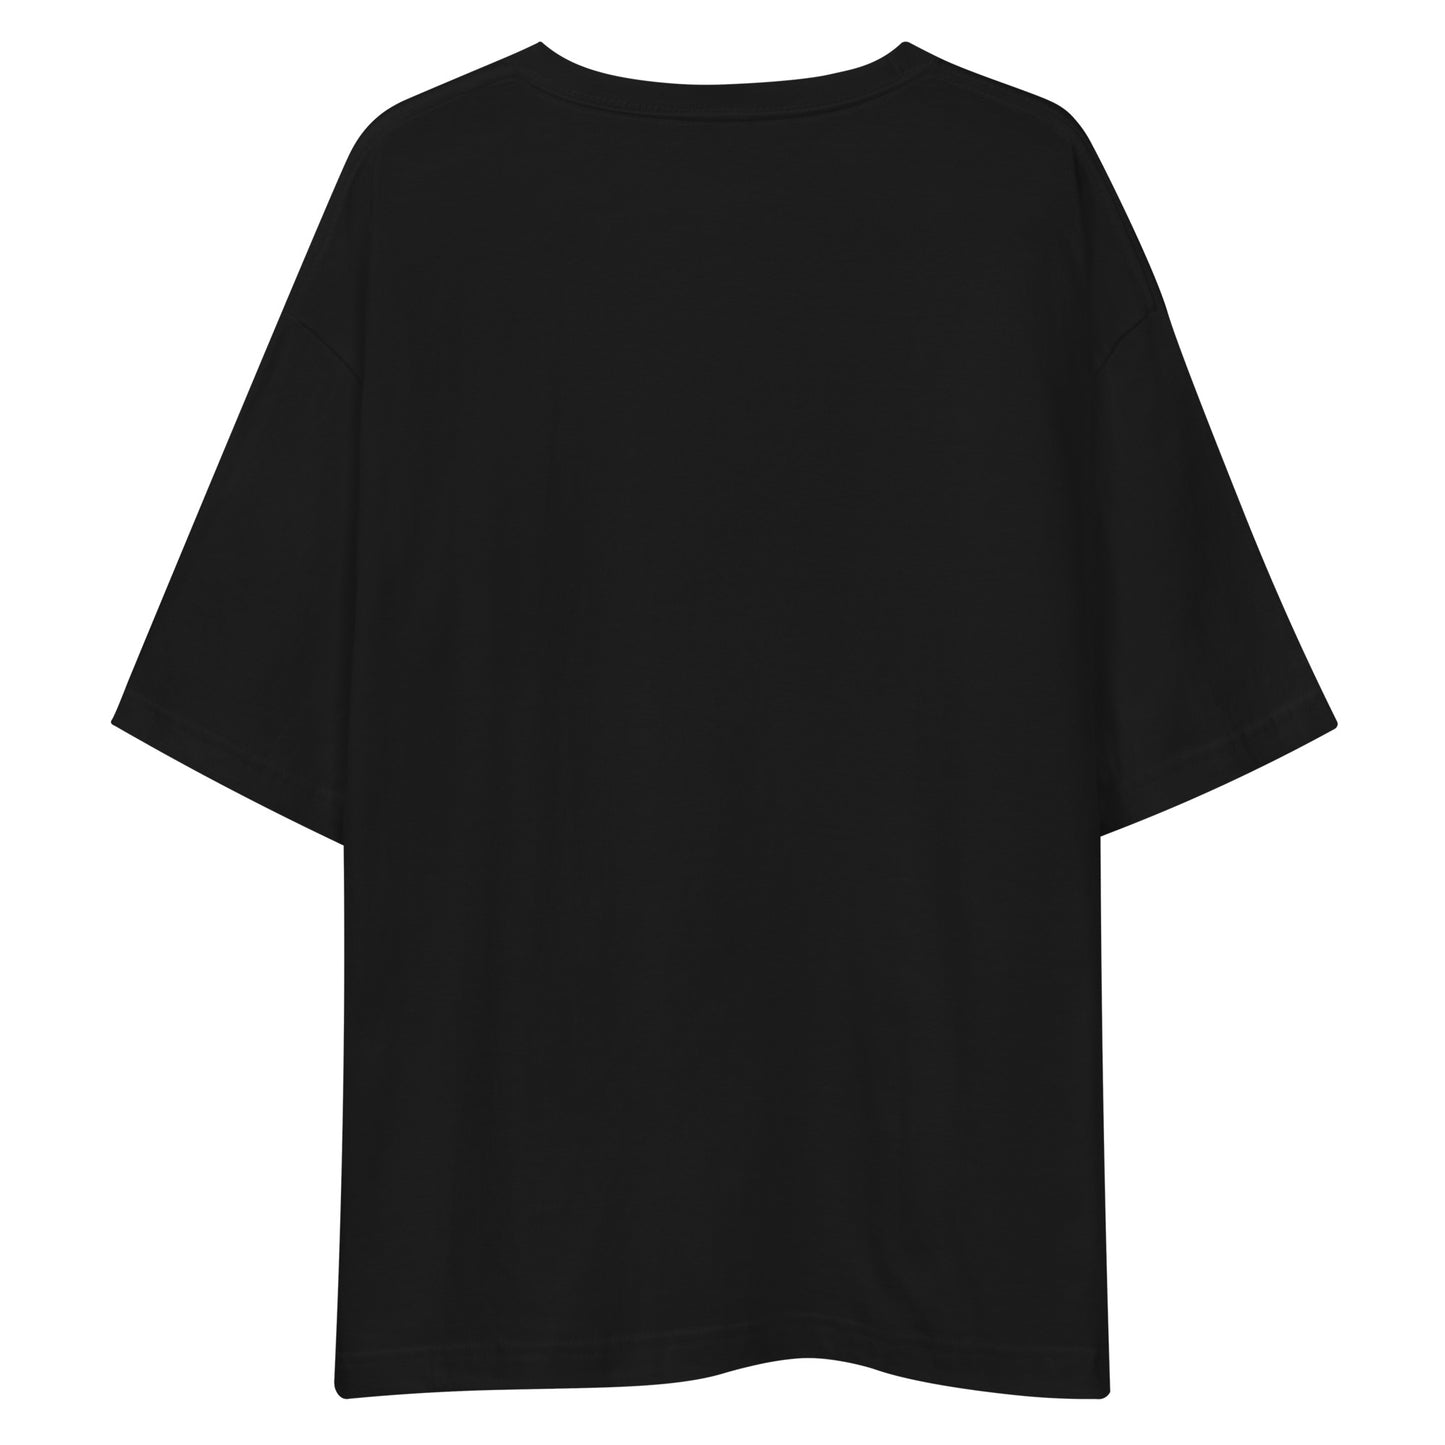 G200 - T-shirt/Oversized (Cheer : Black)